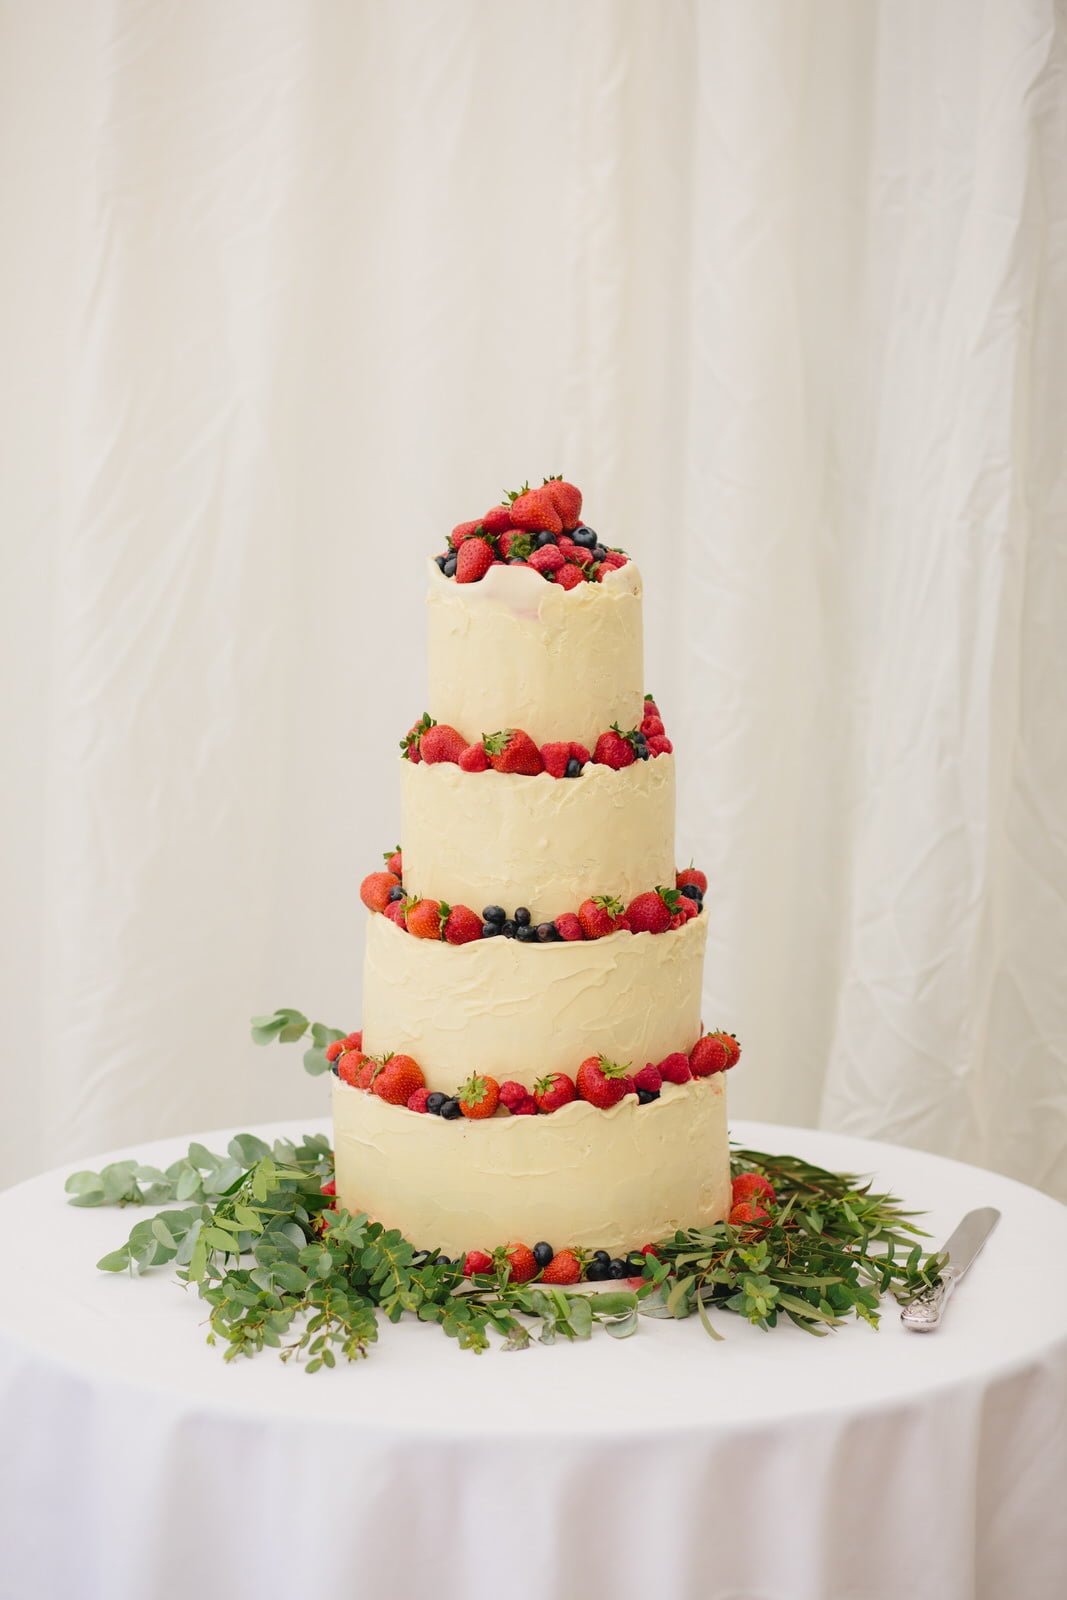 White chocolate wrapped 4 tier wedding cake at Bath Botanical Gardens